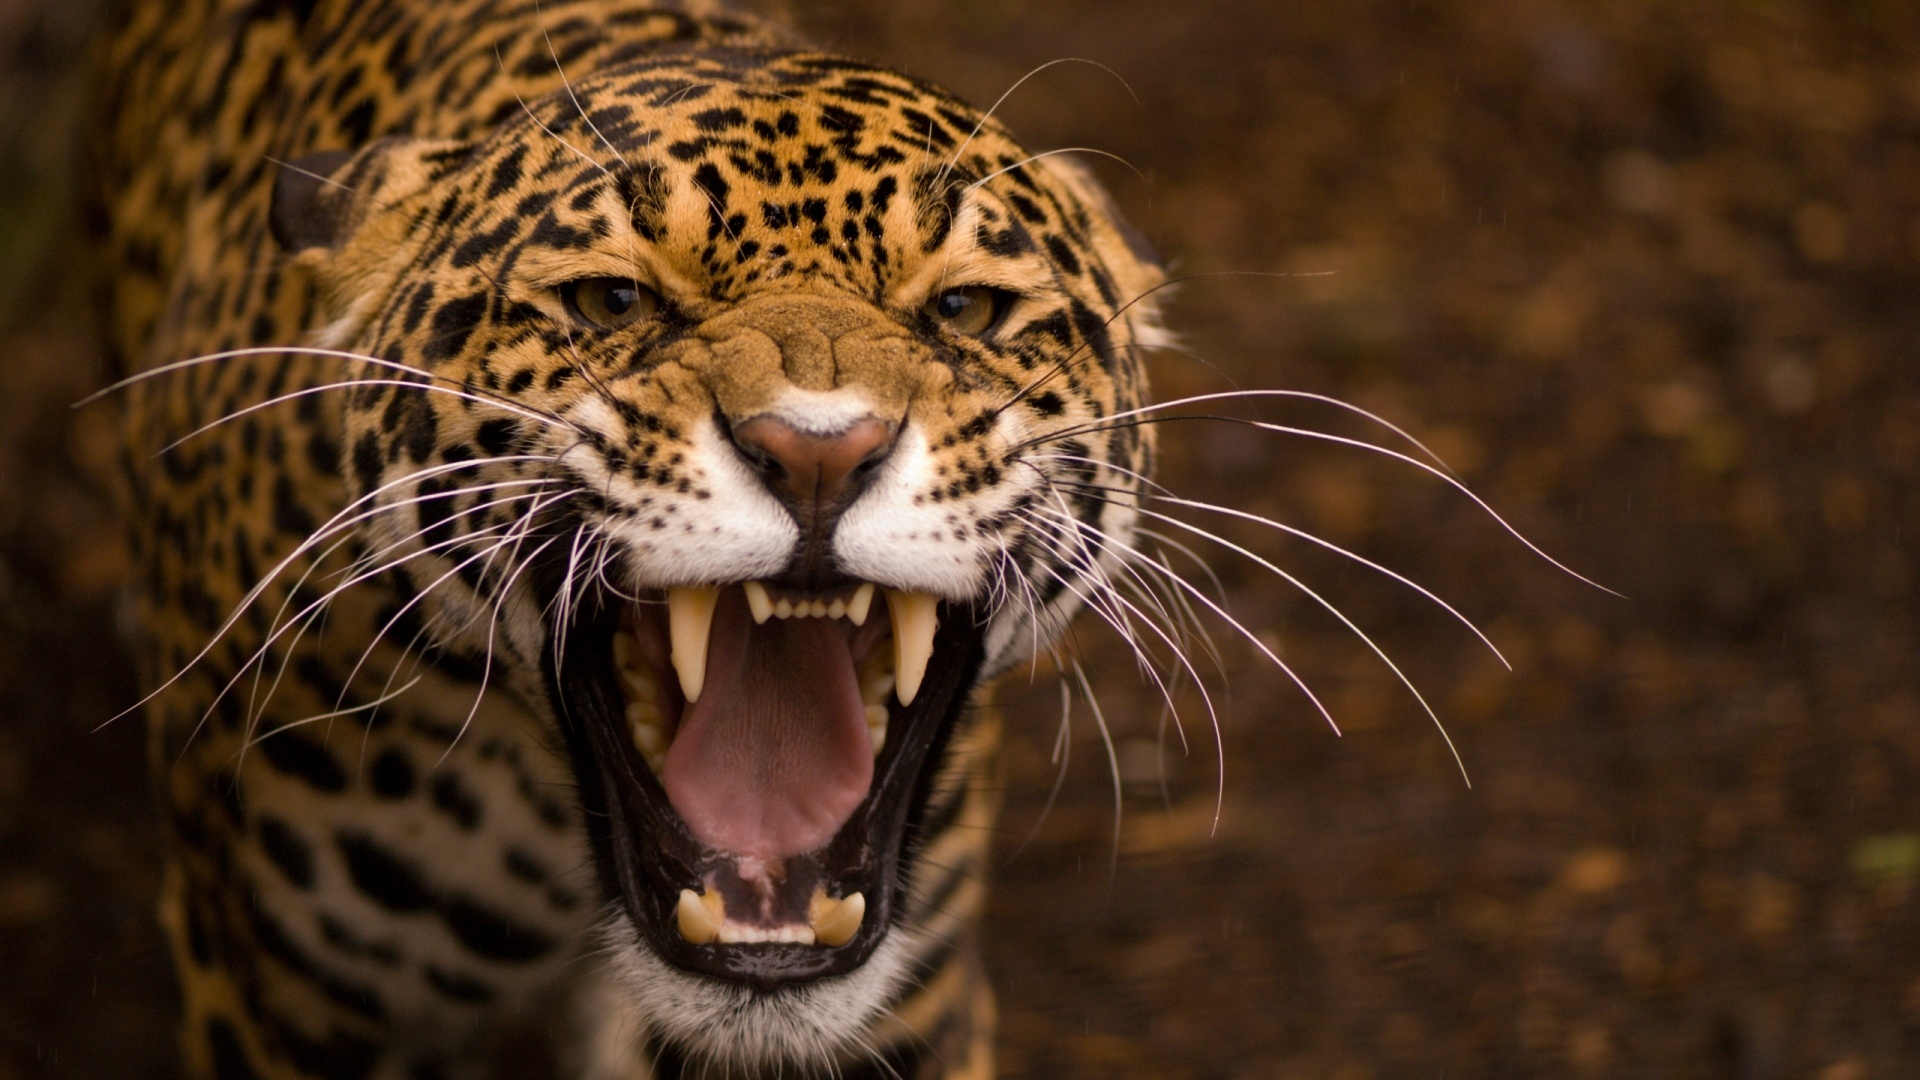 Wallpapers teeth Jaguar cat on the desktop